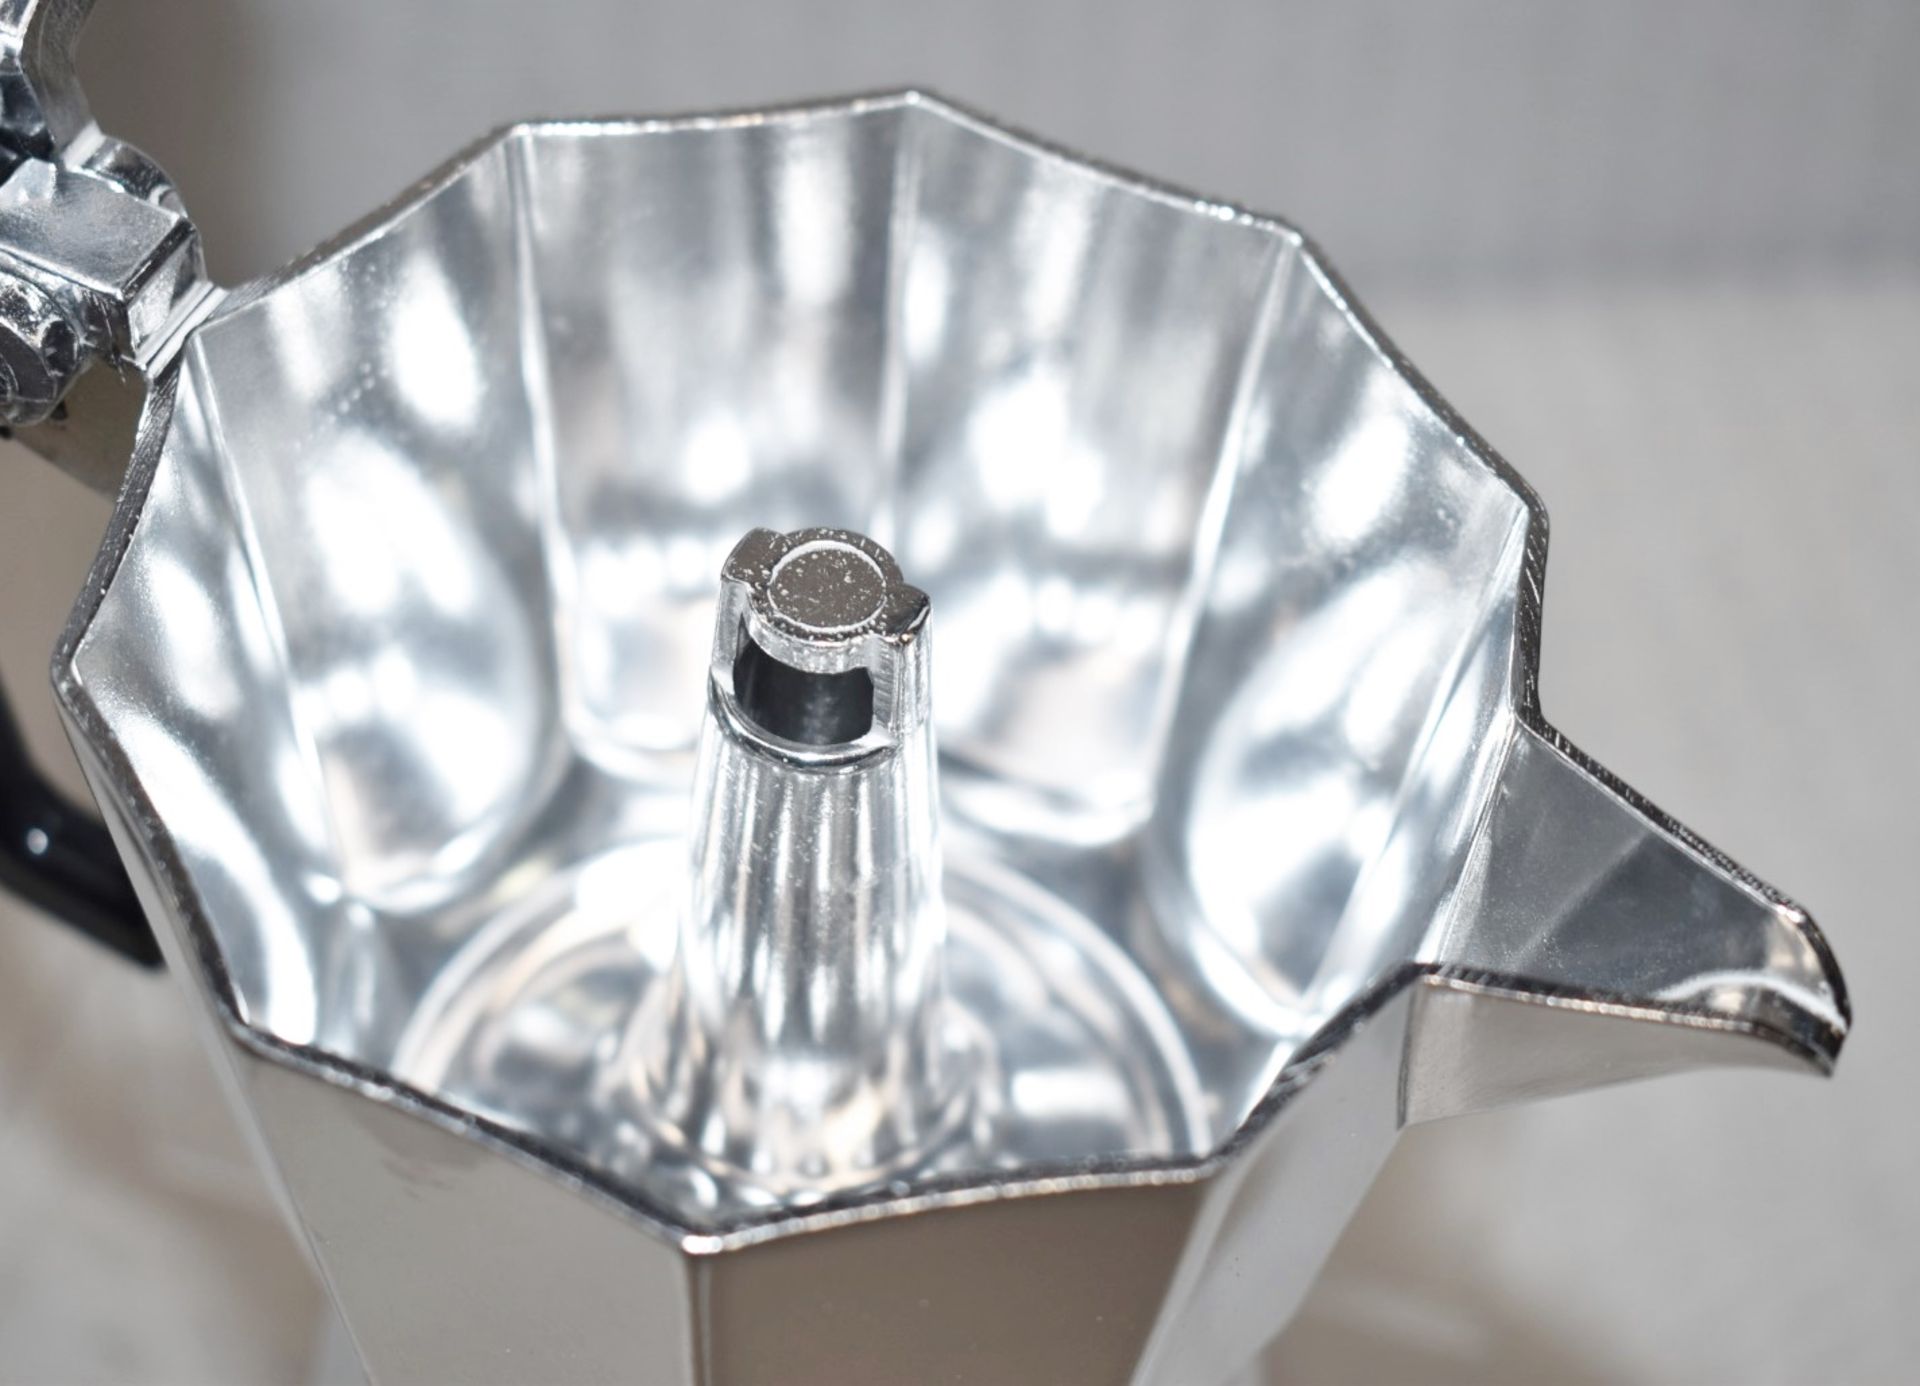 1 x PEZZETTI Italexpress Aluminium Stove Top 6-Cup Moka Pot - Unused Boxed Stock - Ref: HBK365 - Image 7 of 8